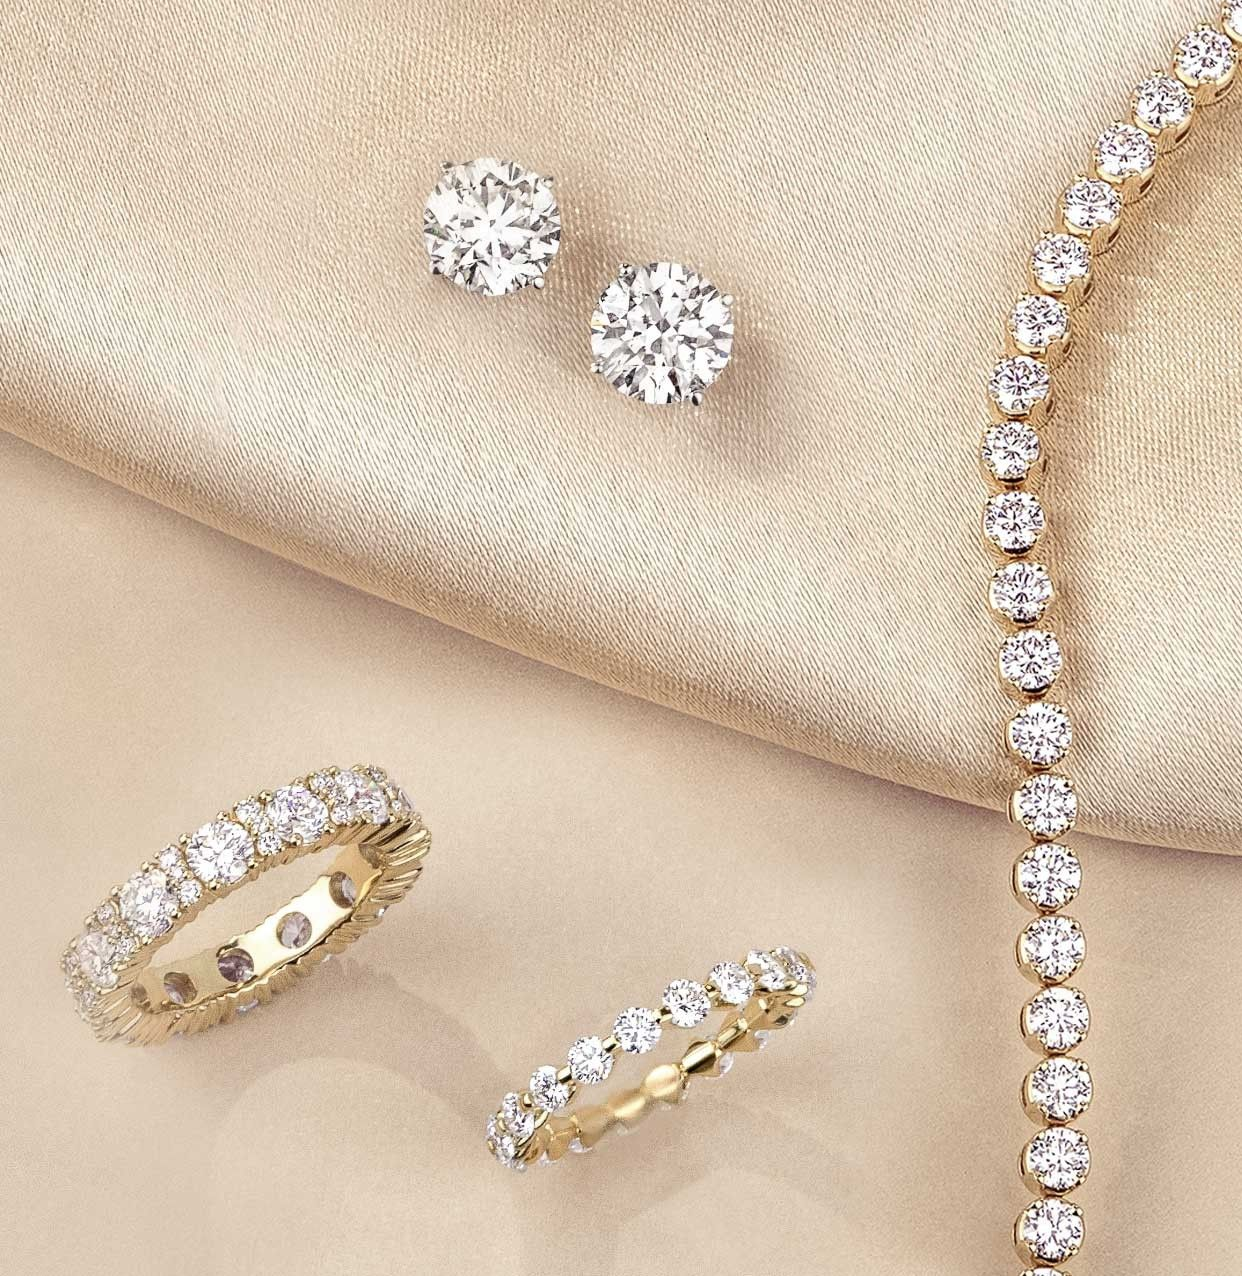 Assortment of diamond jewelry, featuring diamond rings, diamond studs, and a diamond tennis necklace